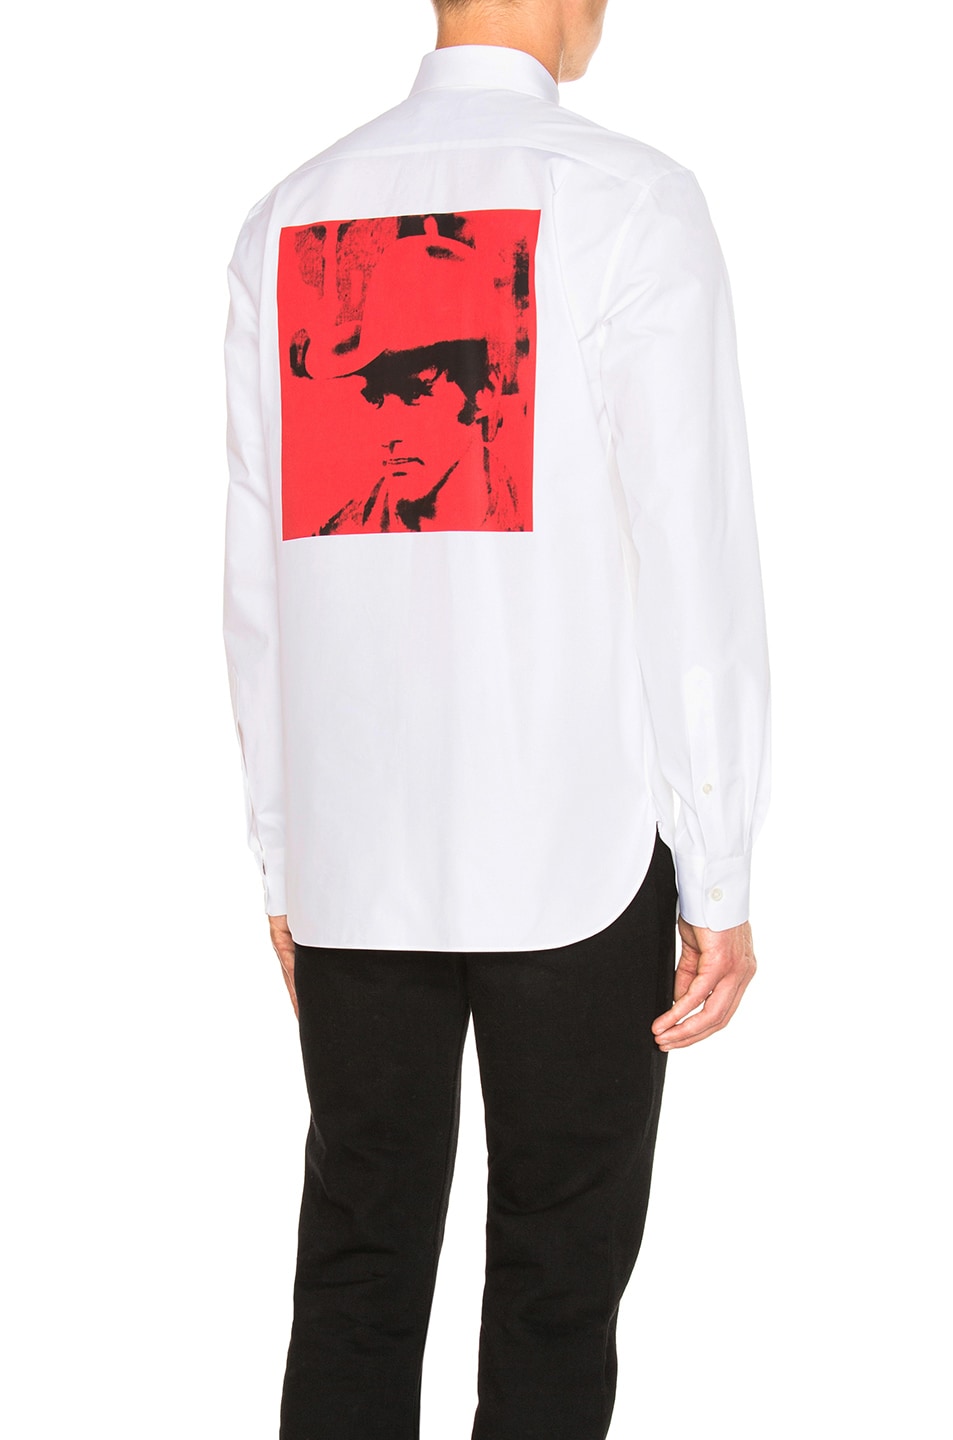 Image 1 of CALVIN KLEIN 205W39NYC Dennis Hopper Shirt in Optic White & Molten Lava